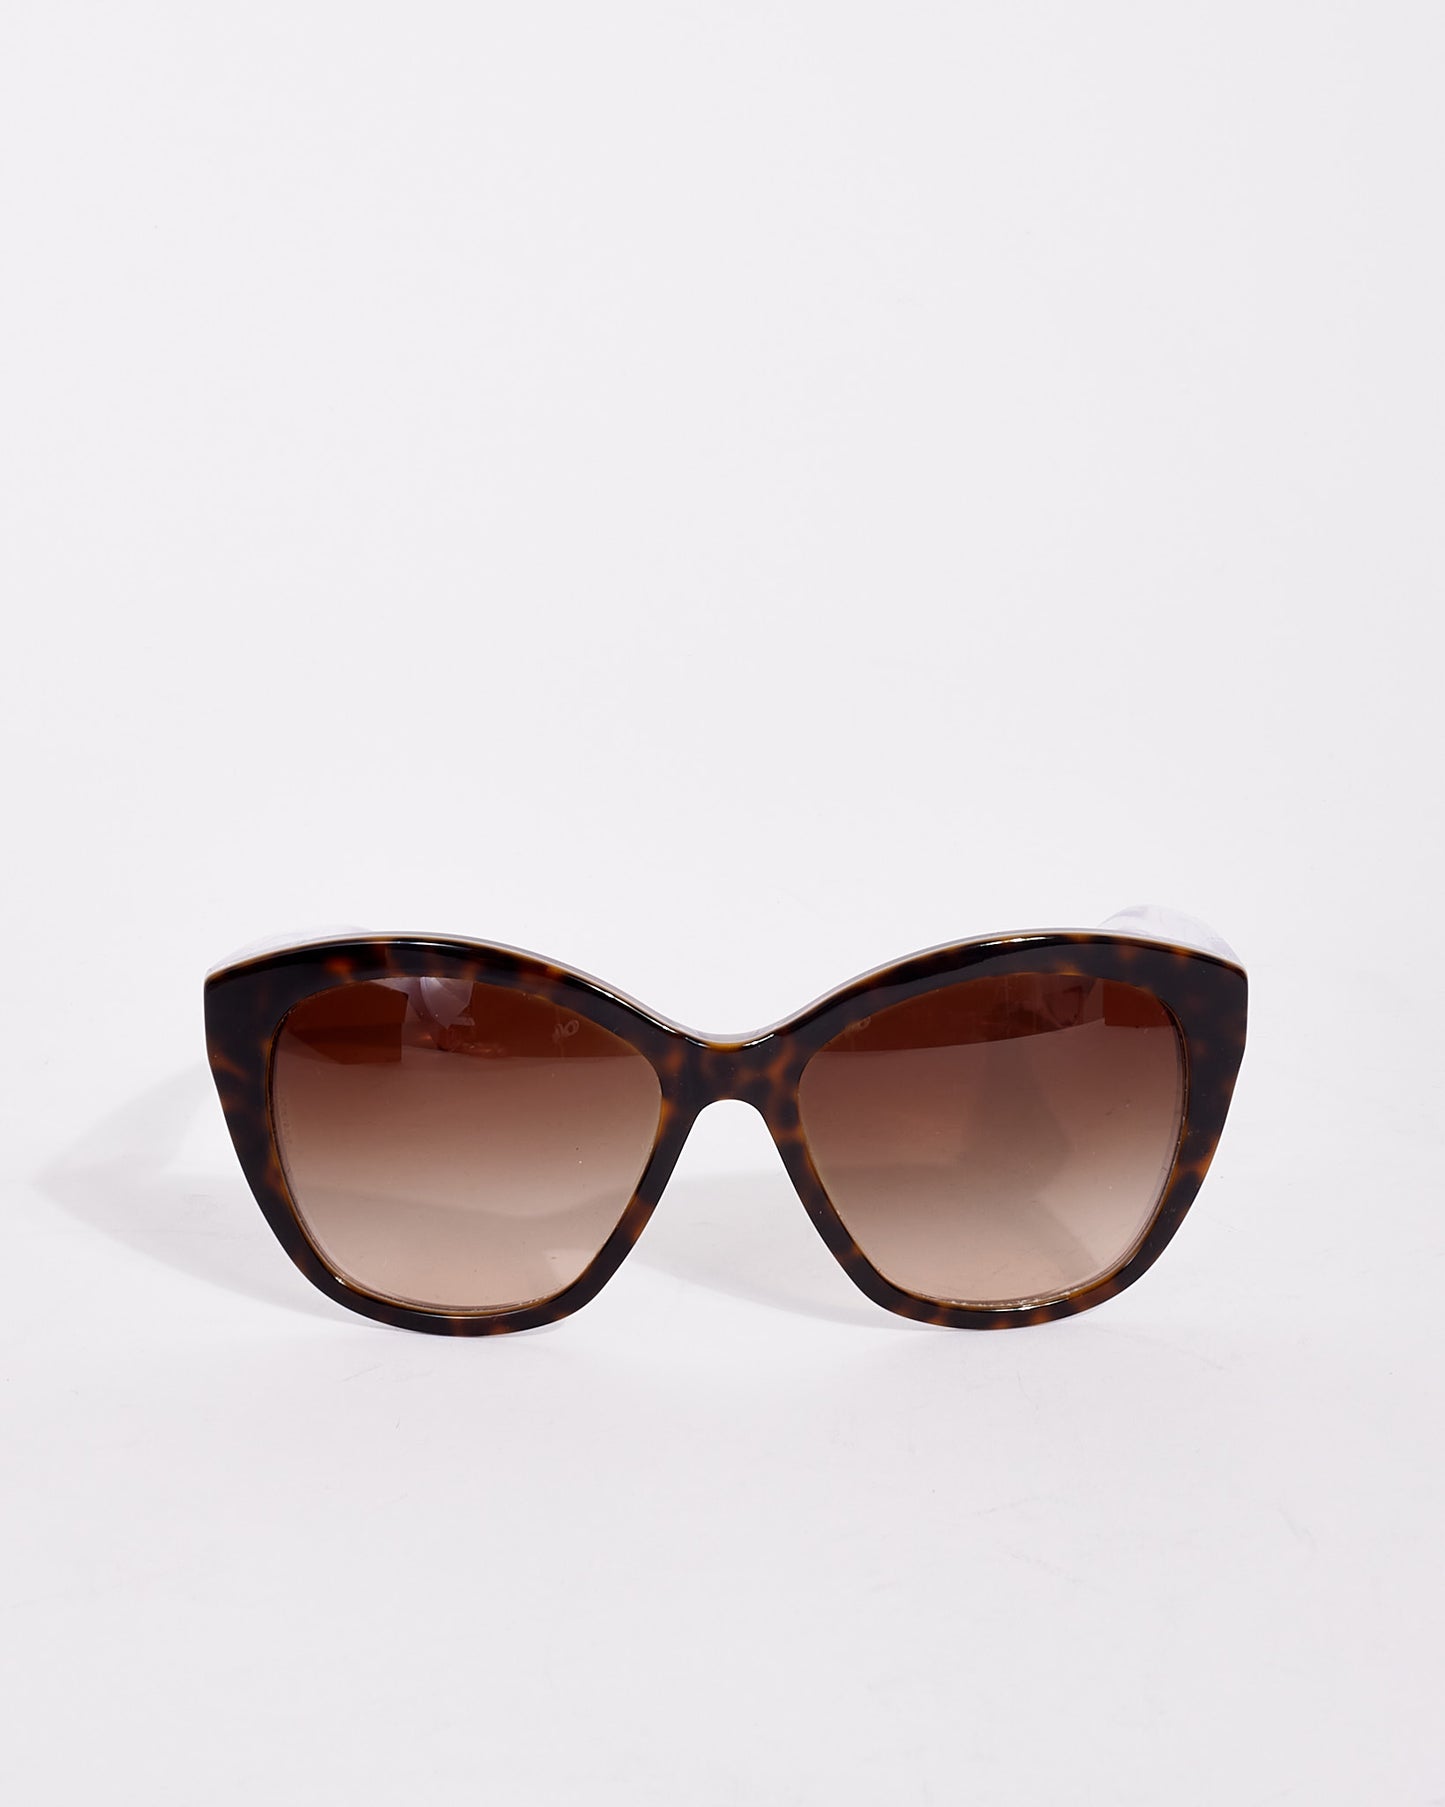 Dolce & Gabbana Brown Tortoise DG4220 Cat Eye Sunglasses